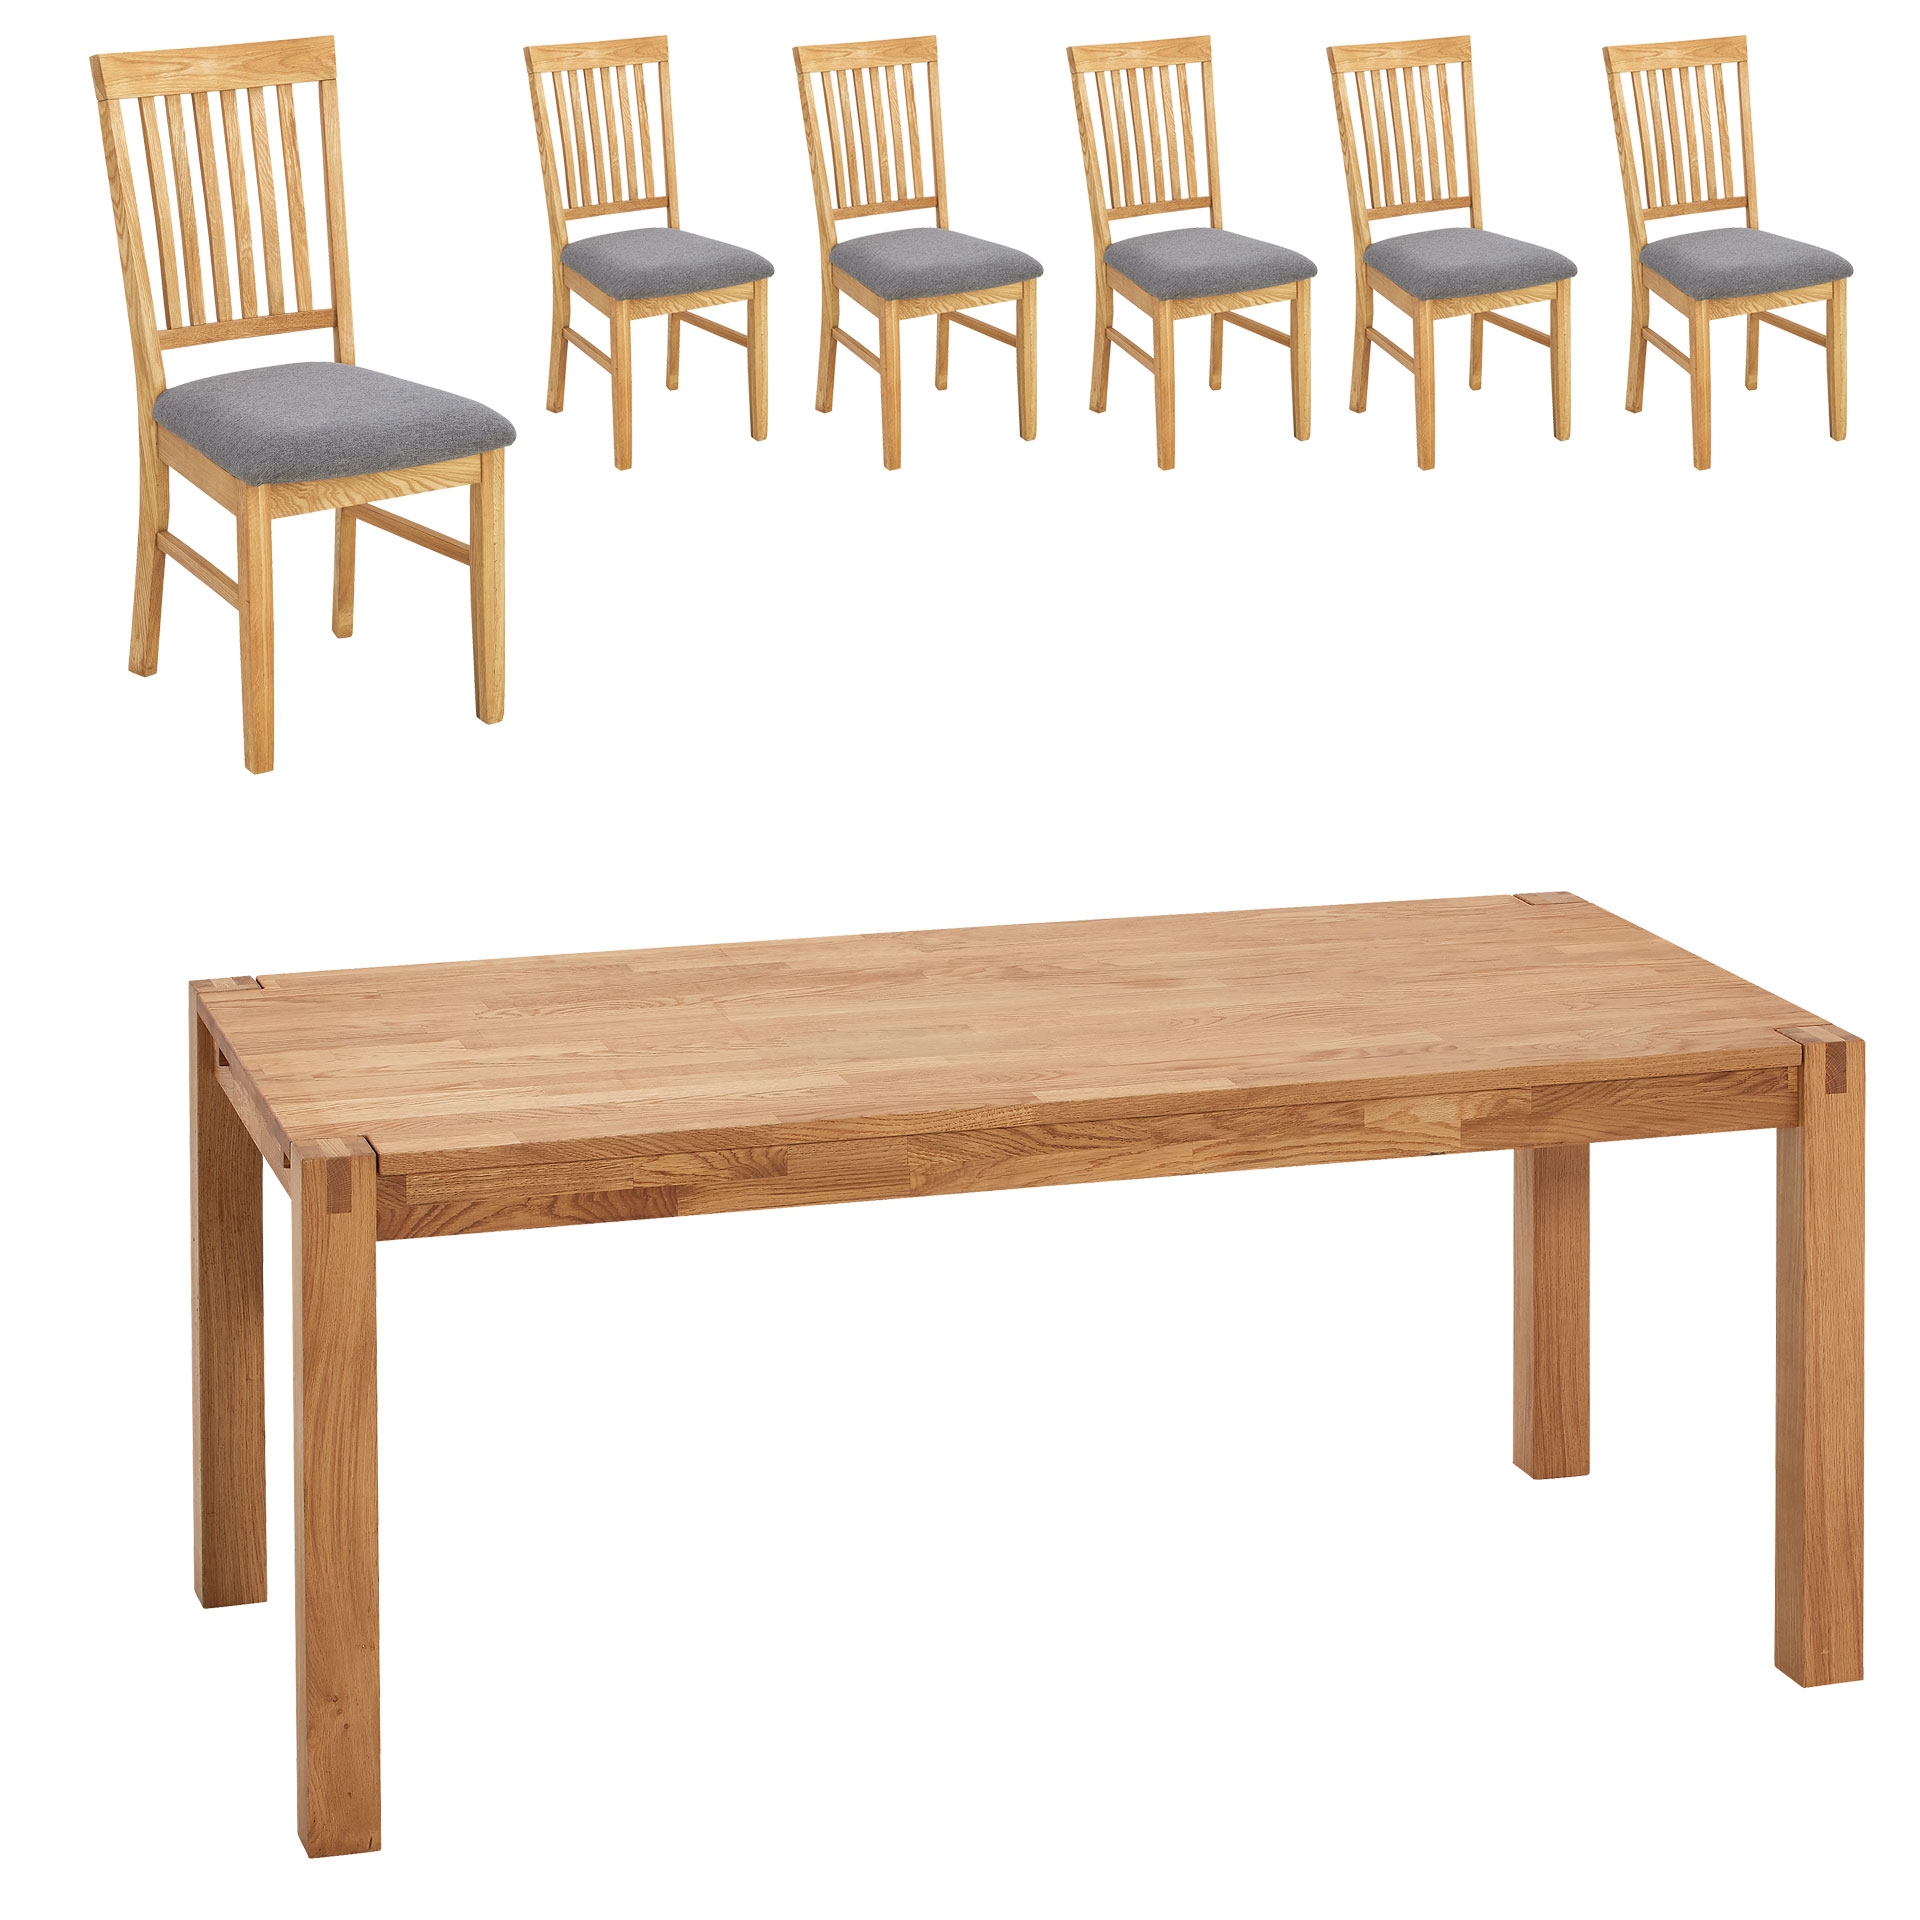 Essgruppe Royal Oak (90x180, 6 Stühle, grau)